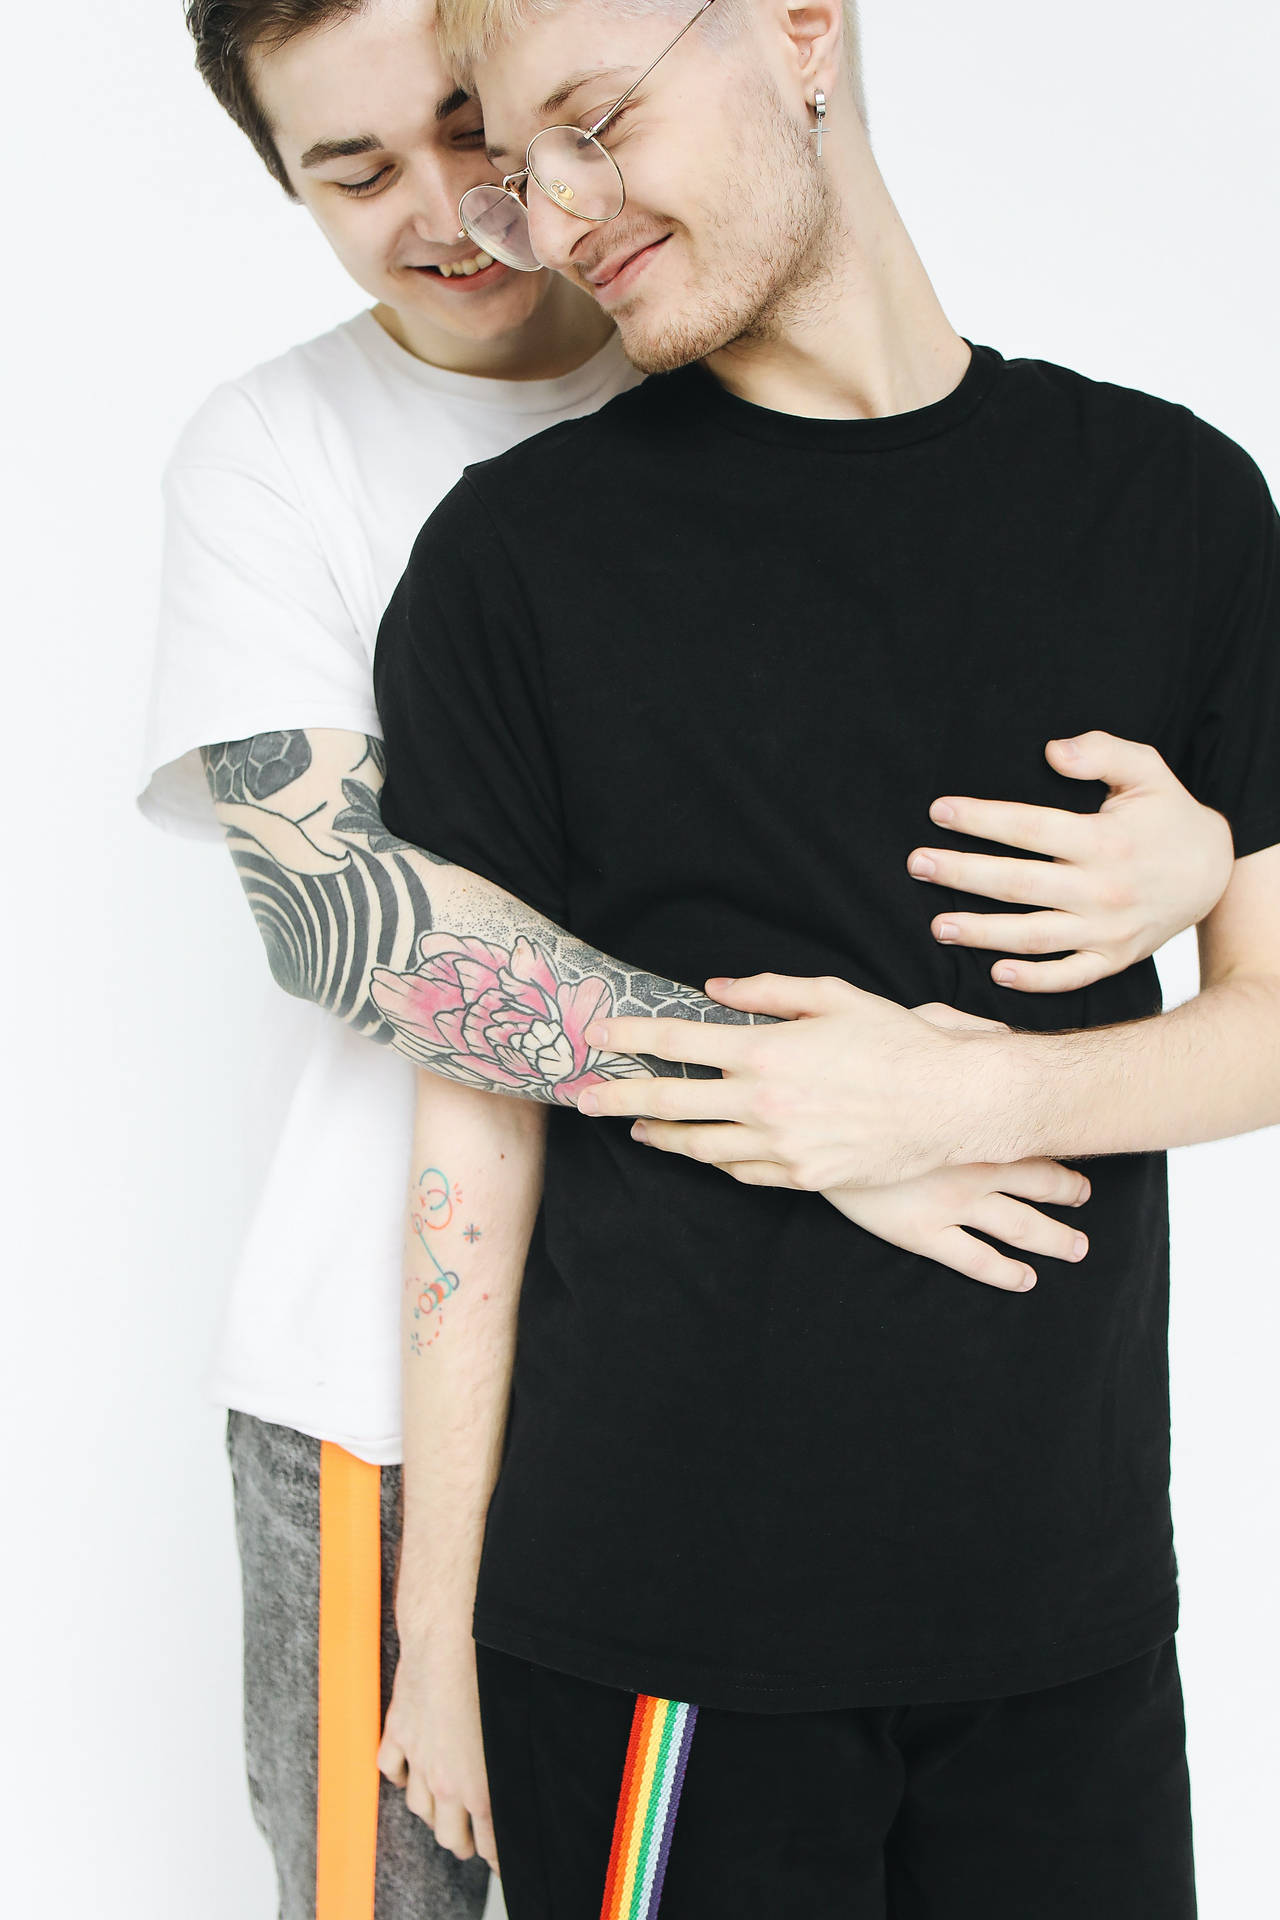 Gay Men Hugging From Behind Wallpaper